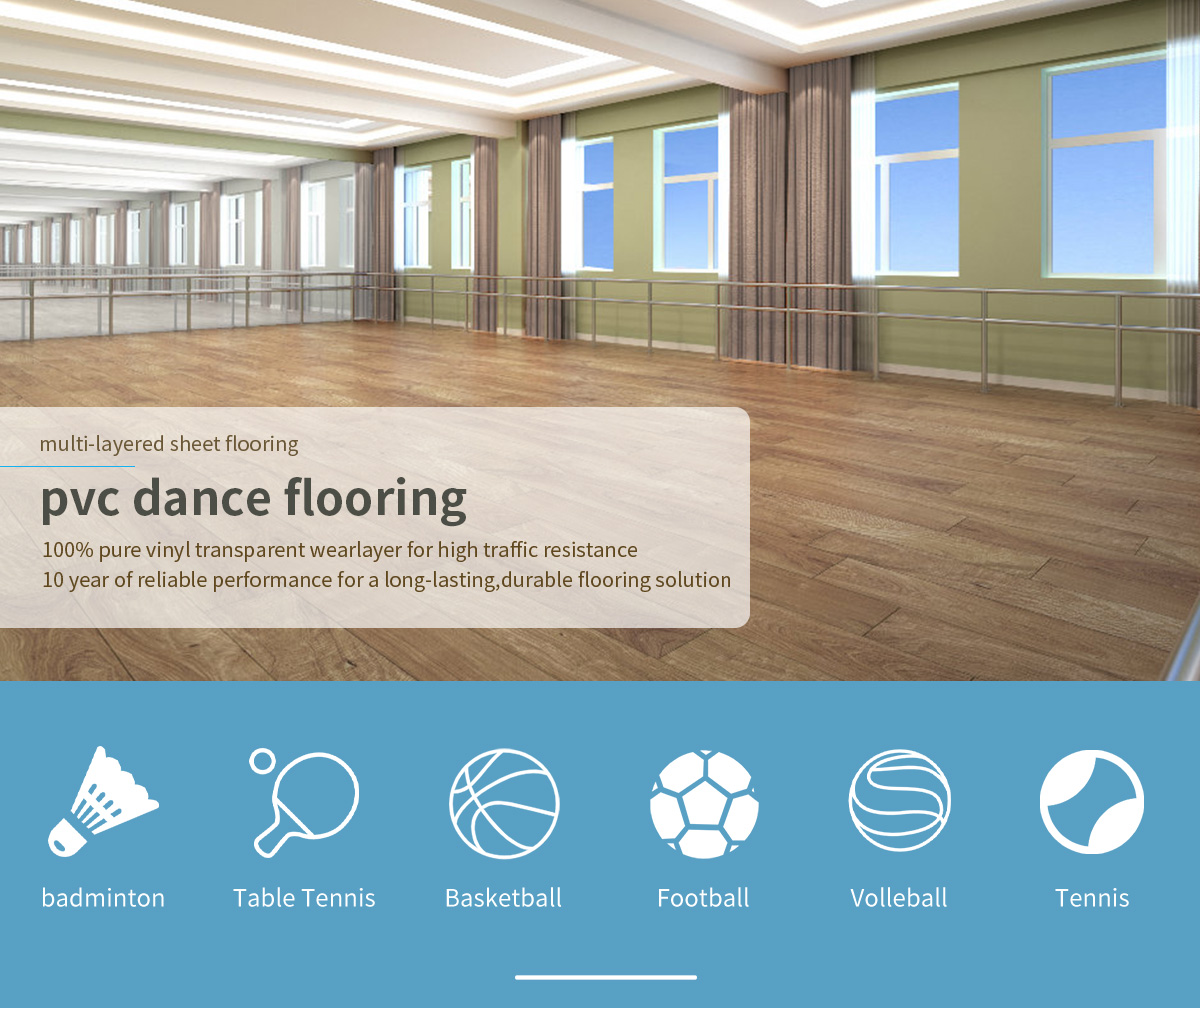 36pvc-dance-flooring_01(1).jpg